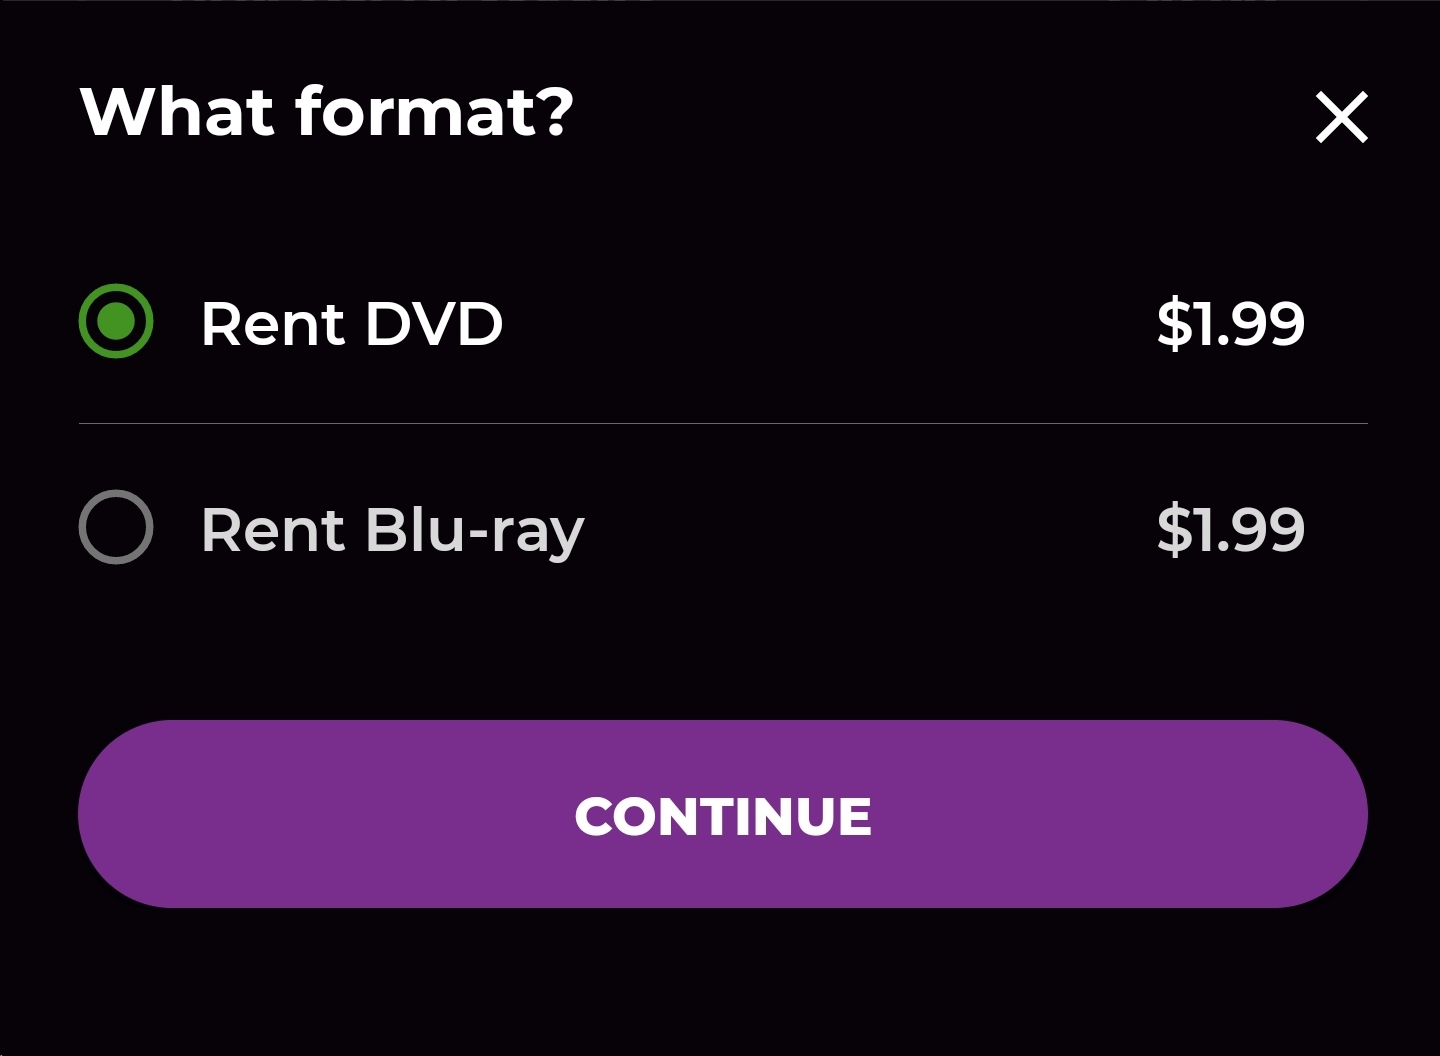 Redbox DVD and Blu-Ray price at $1.99